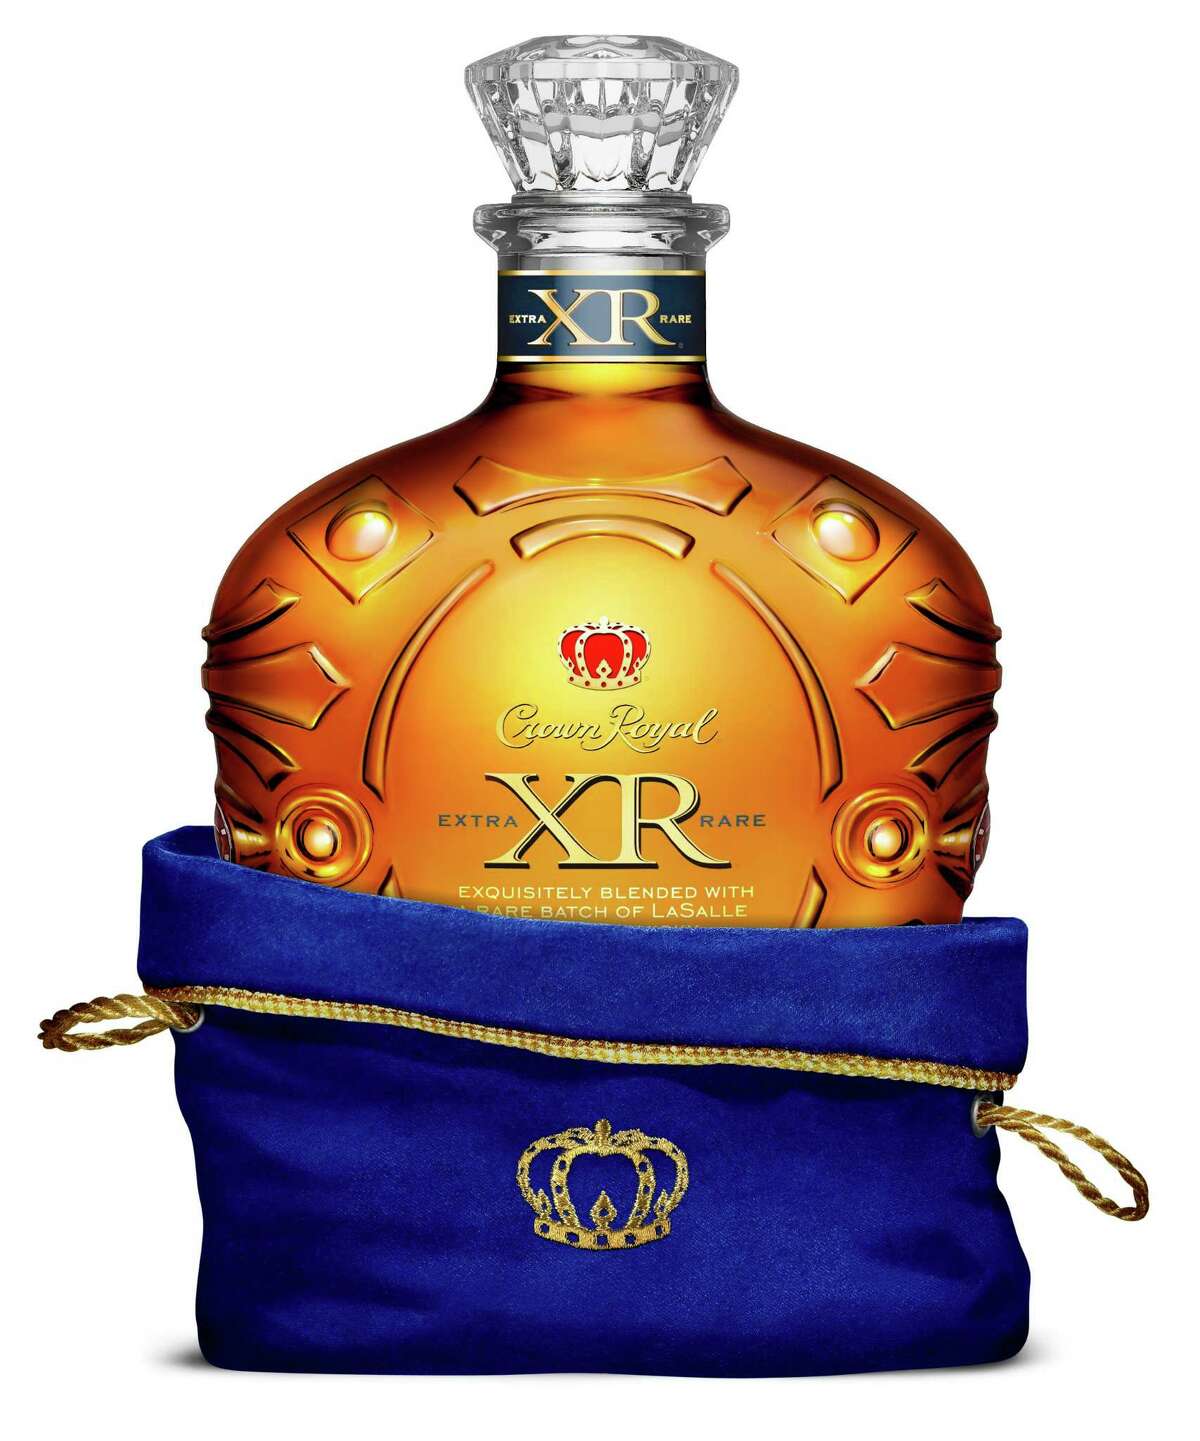 Bag that booze: Crown Royal, Texas Crown Club battle over crown logo, clo.....